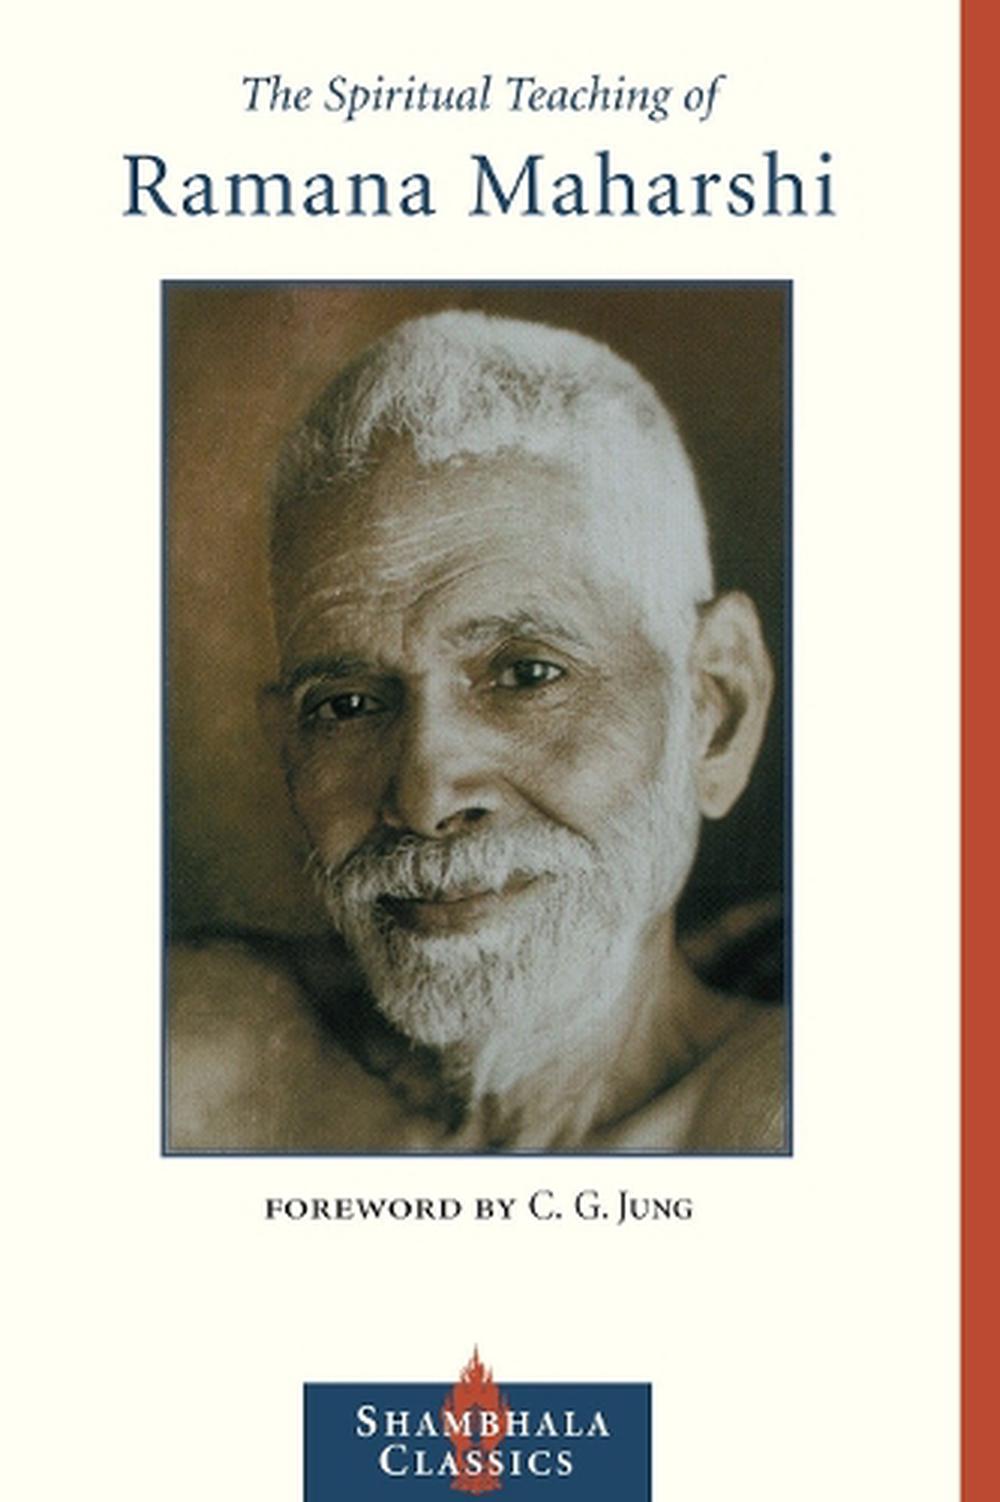 The Spiritual Teaching of Ramana Maharshi by Ramana Maharshi, Paperback ...